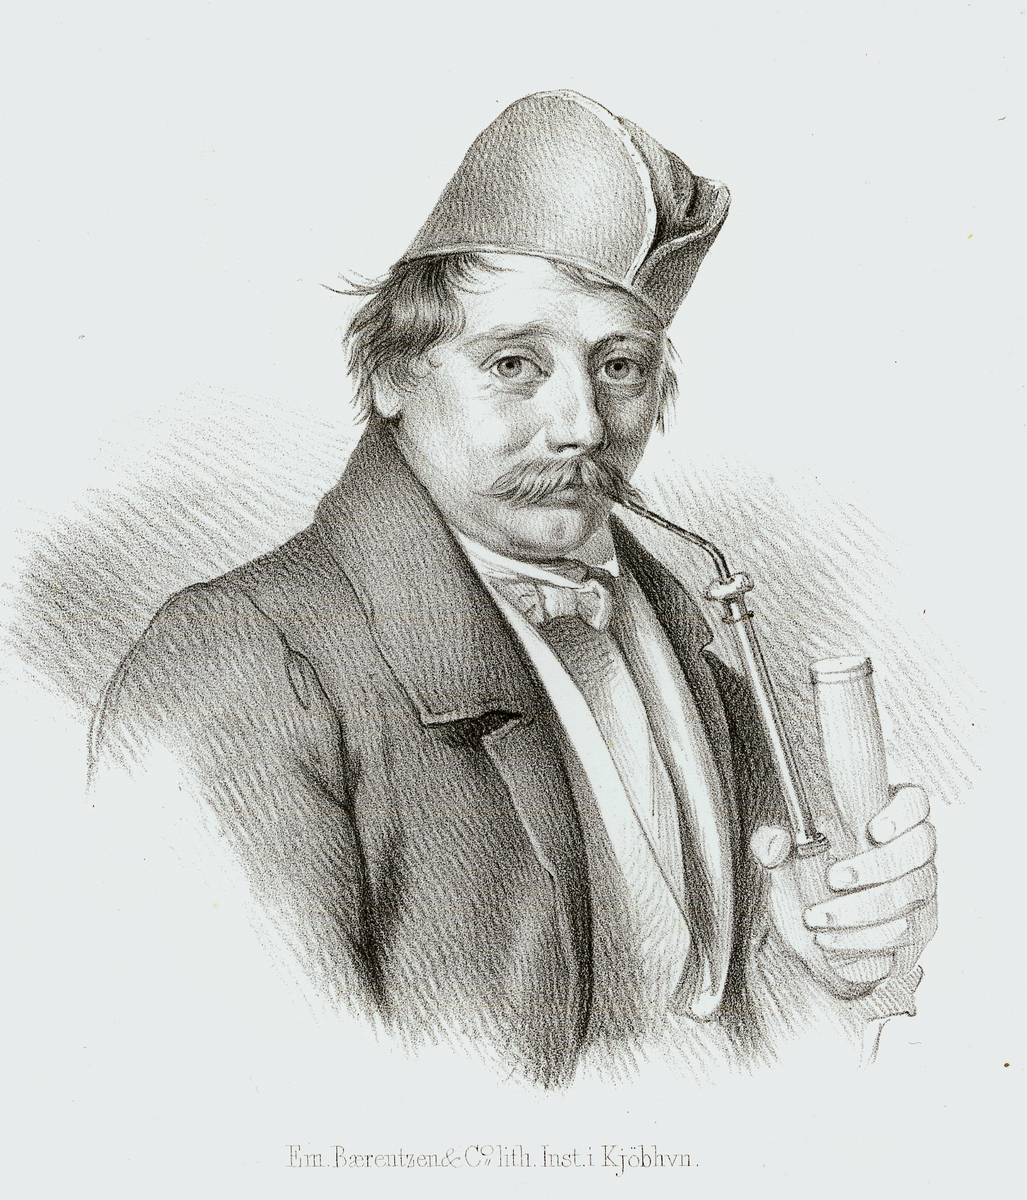 Fearnley, Thomas (1802 - 1842)